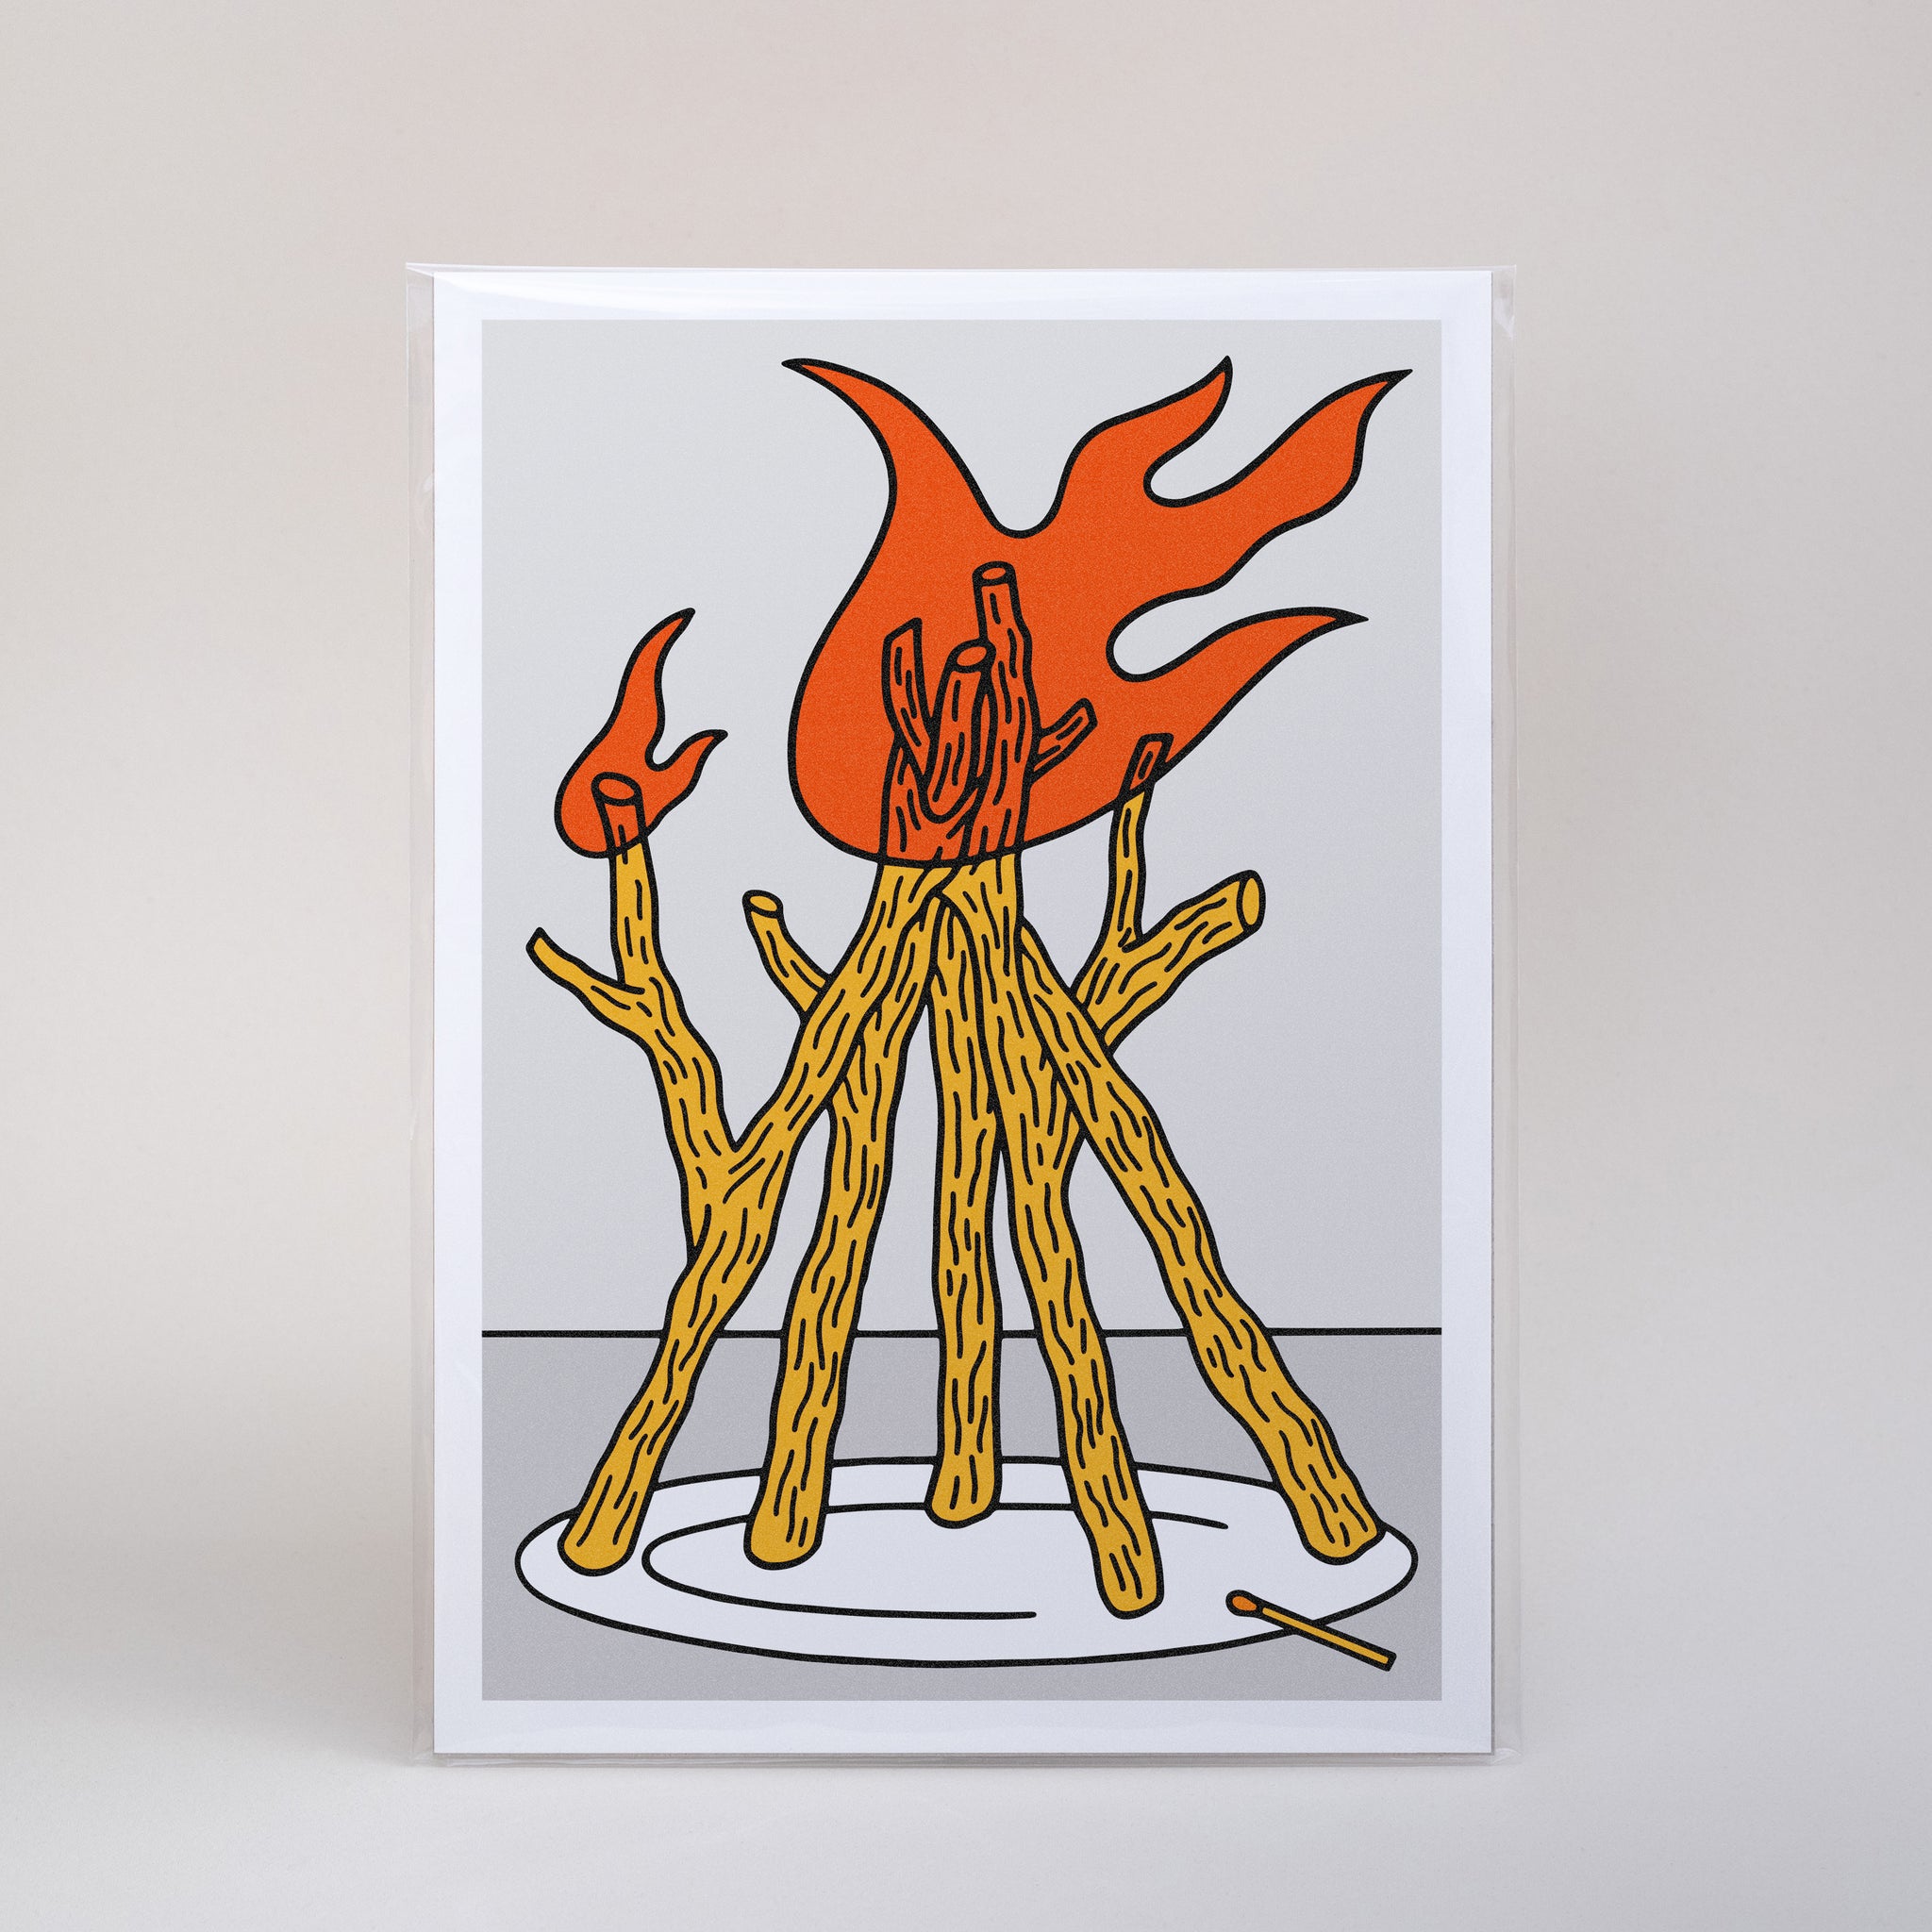 Risograph Print – Fire